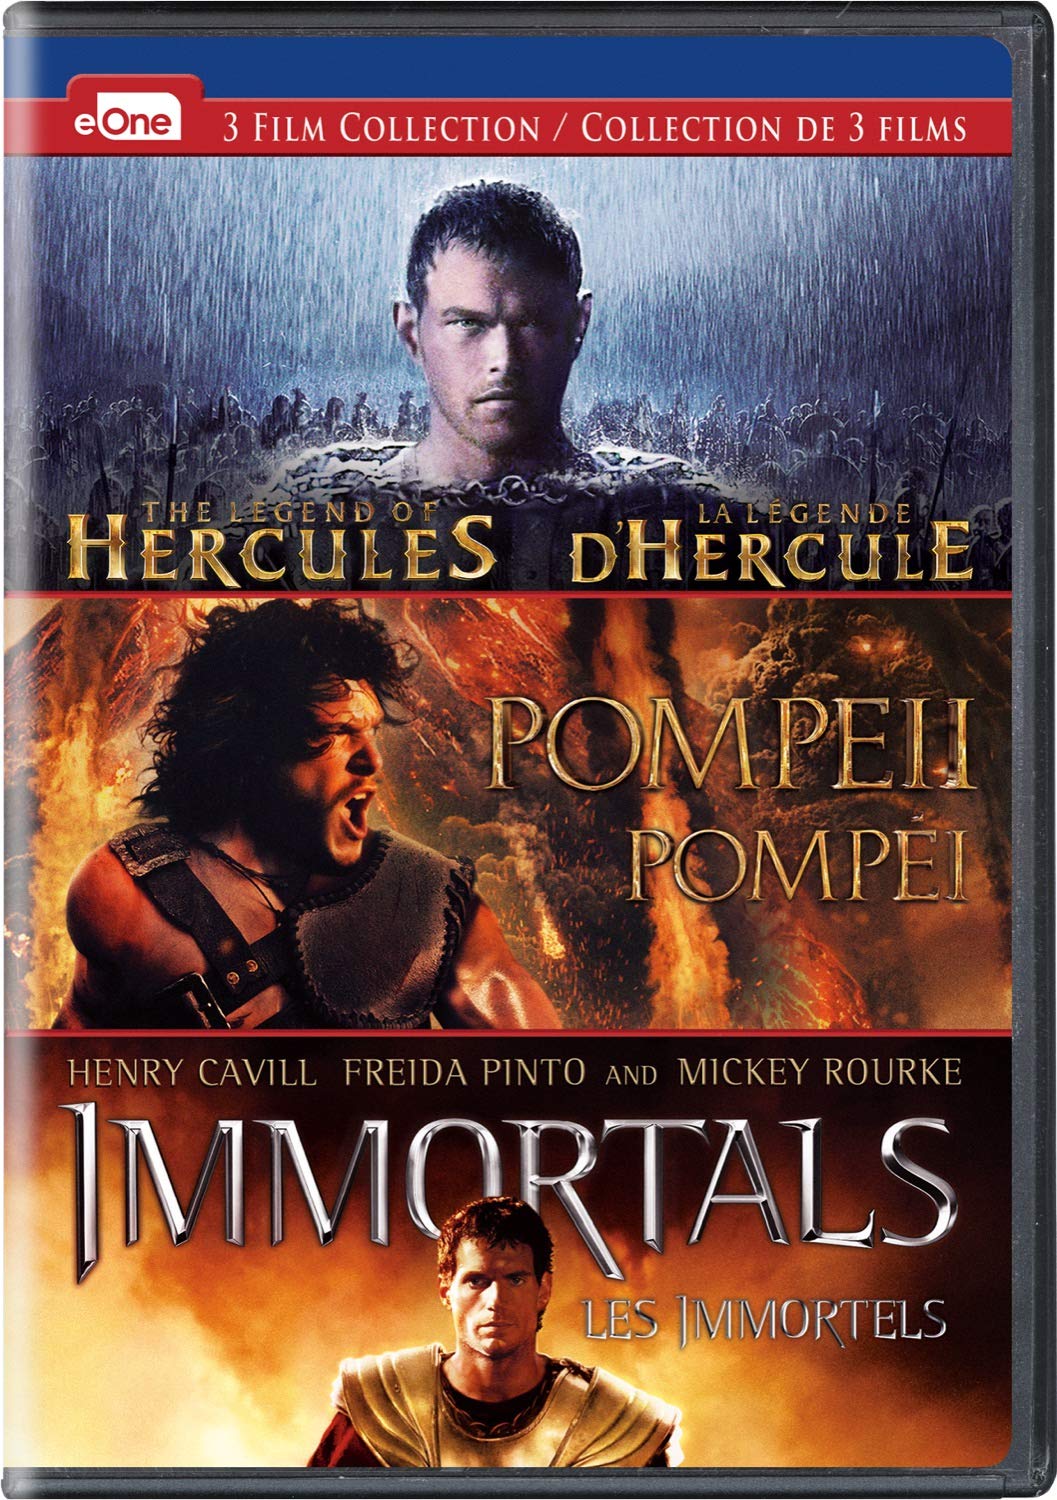 Legend of Hercules / / Pompeii / / Immortals DVD Triple Feature on MovieShack